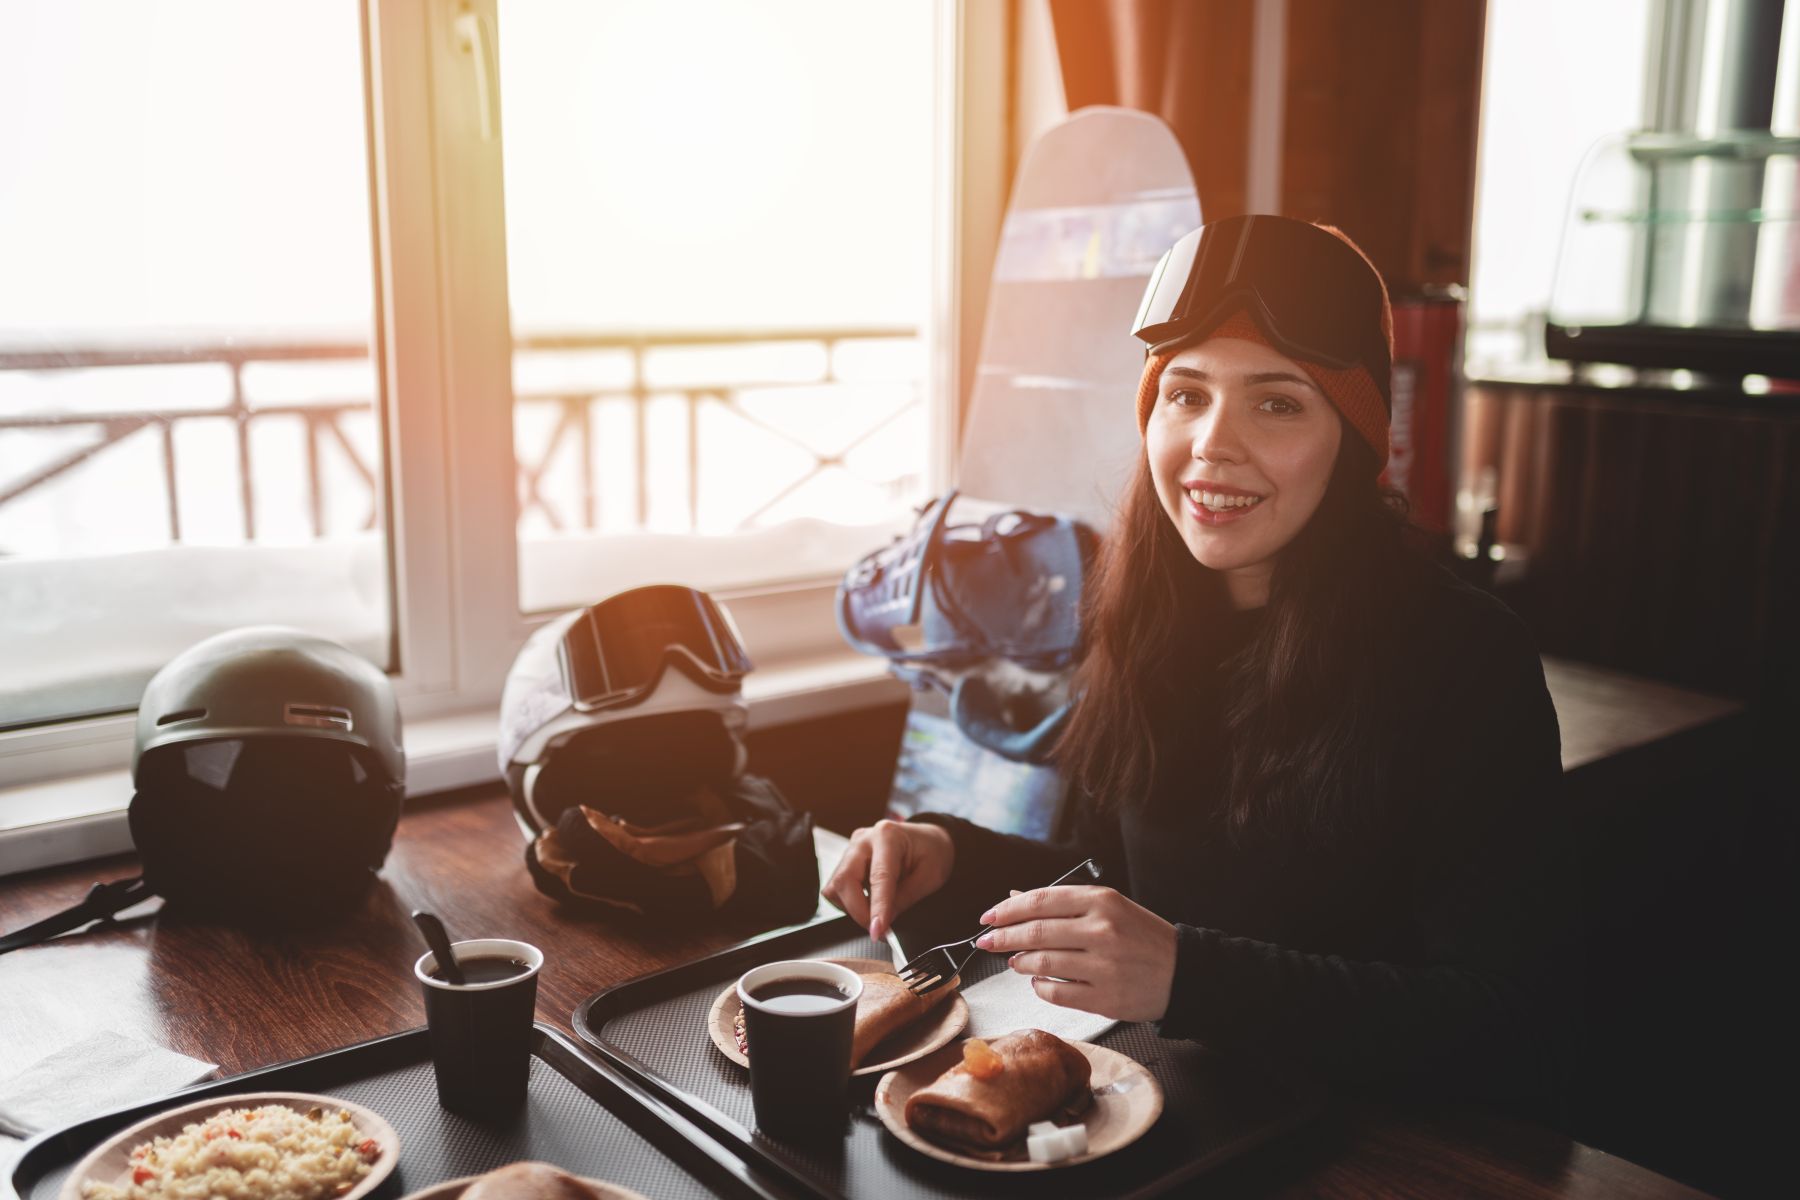 Woman with ski gear eating breakfast